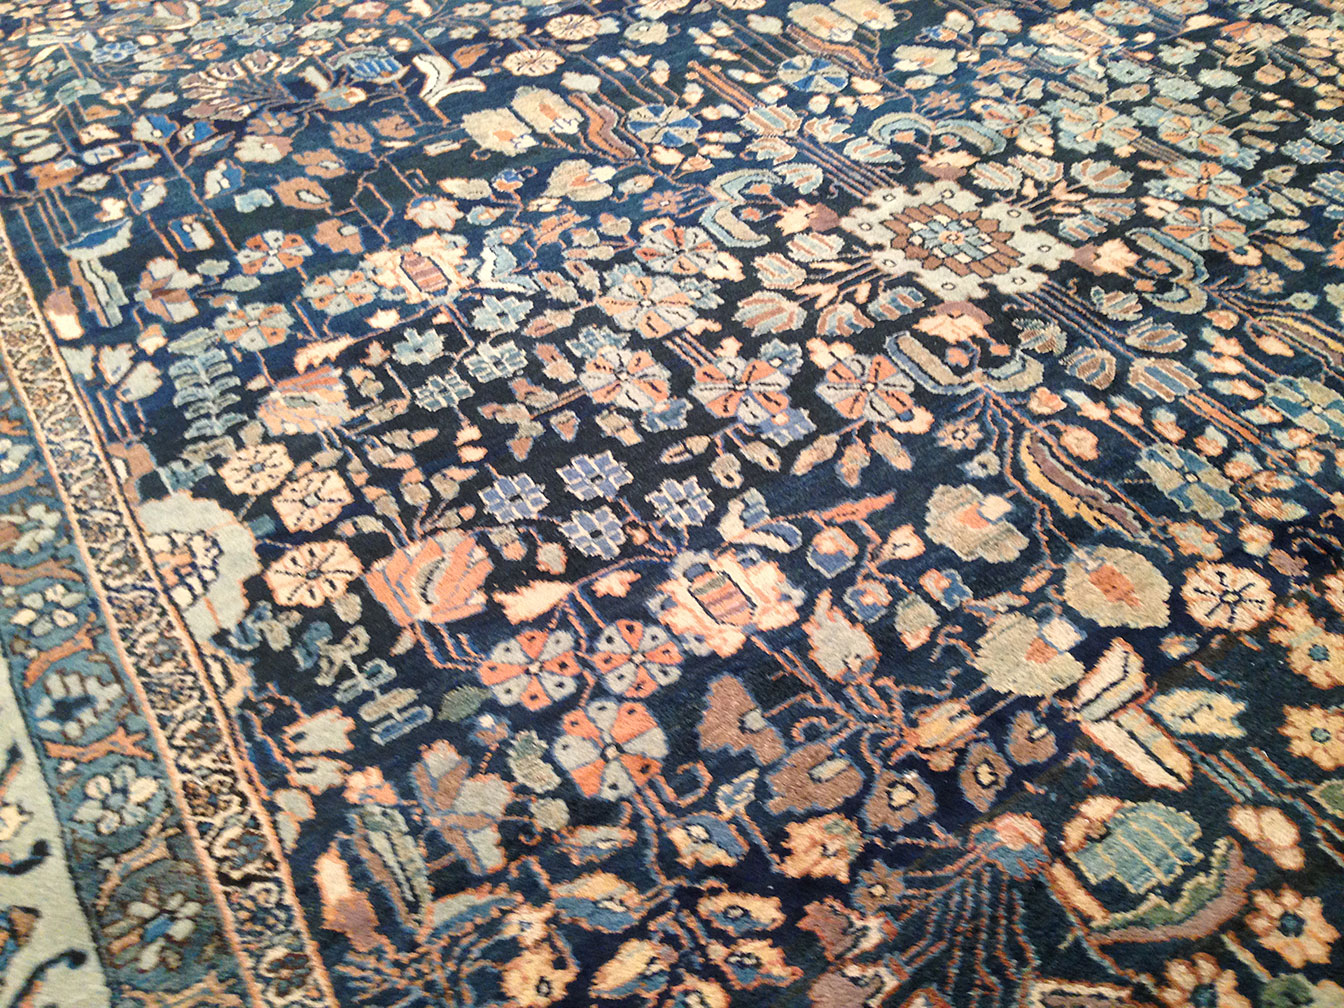 Antique bibi kabad Carpet - # 50688